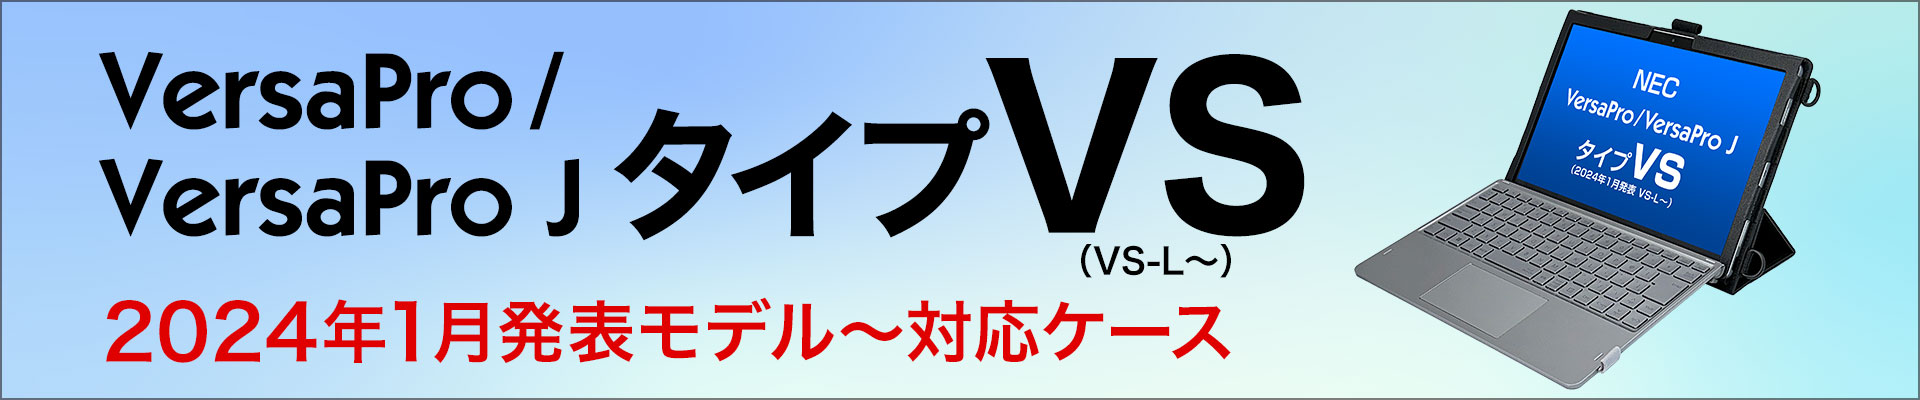 NEC VersaProタイプVS(VS-L〜)専用ケース